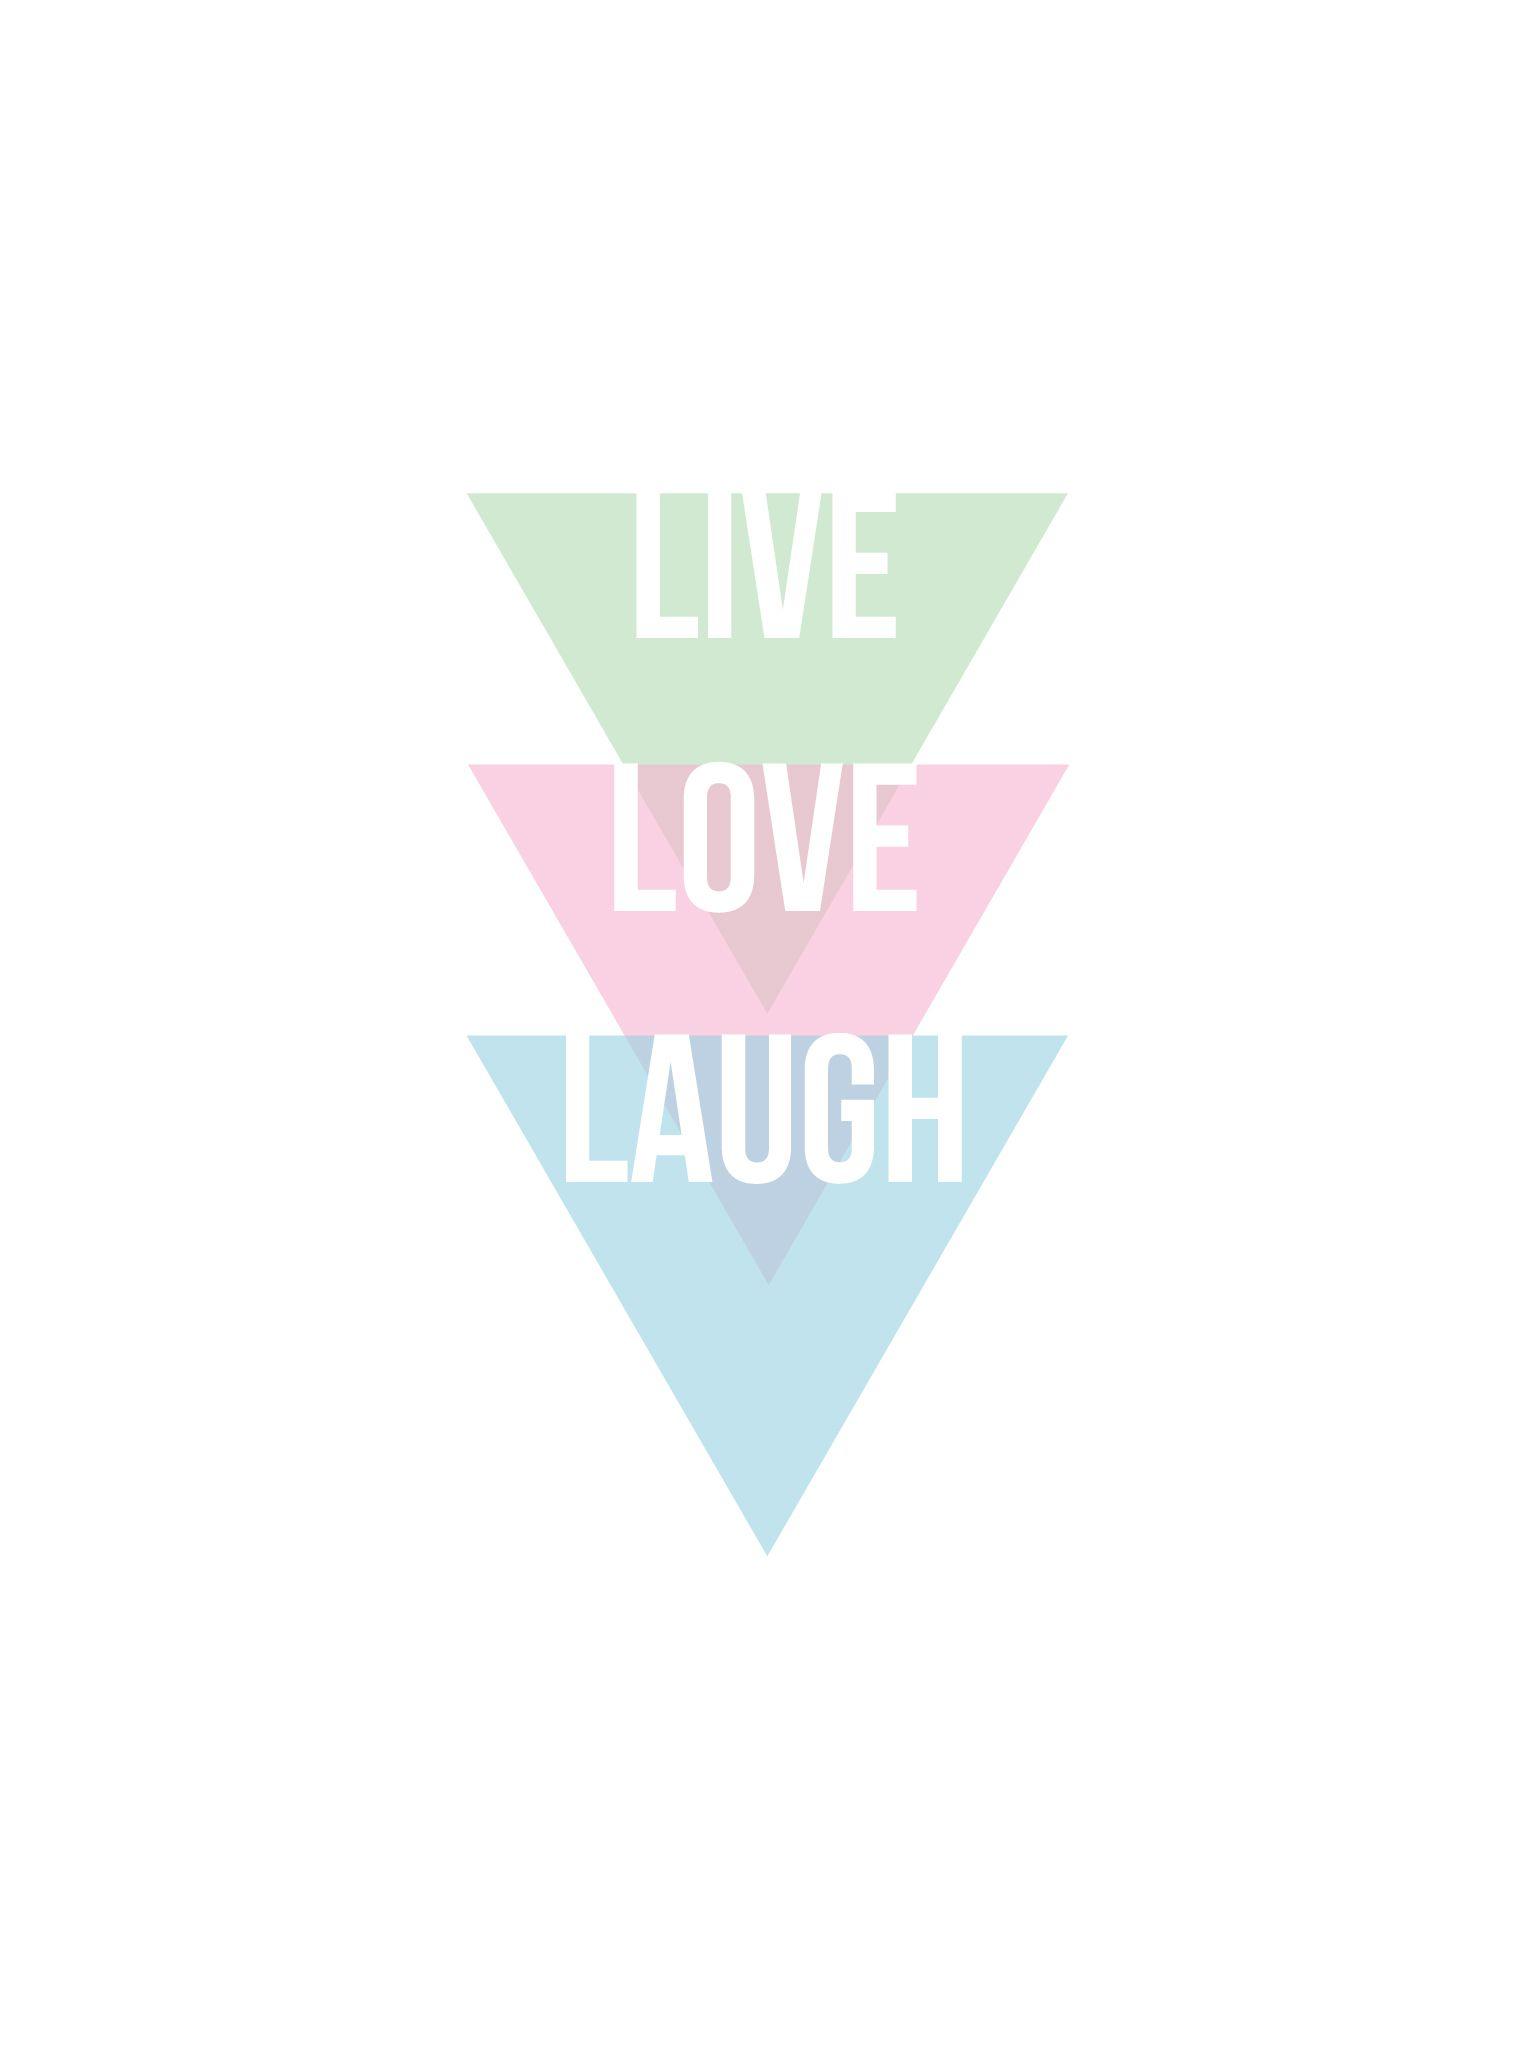 Downloads: Live, Love, Laugh Wallpaper